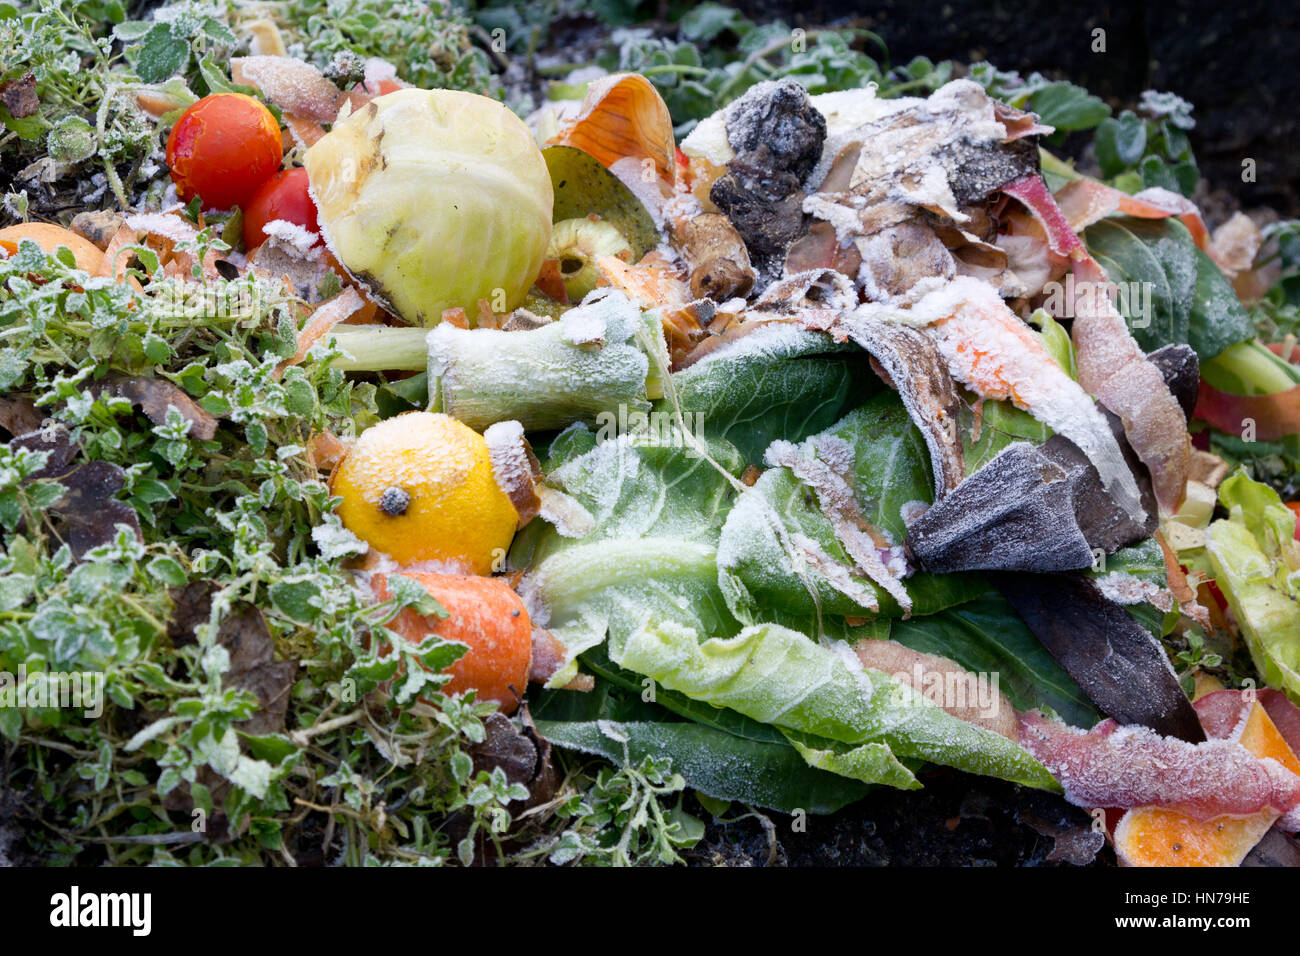 Komposthaufen mit Gemüse Peelings und Eis Stockfoto